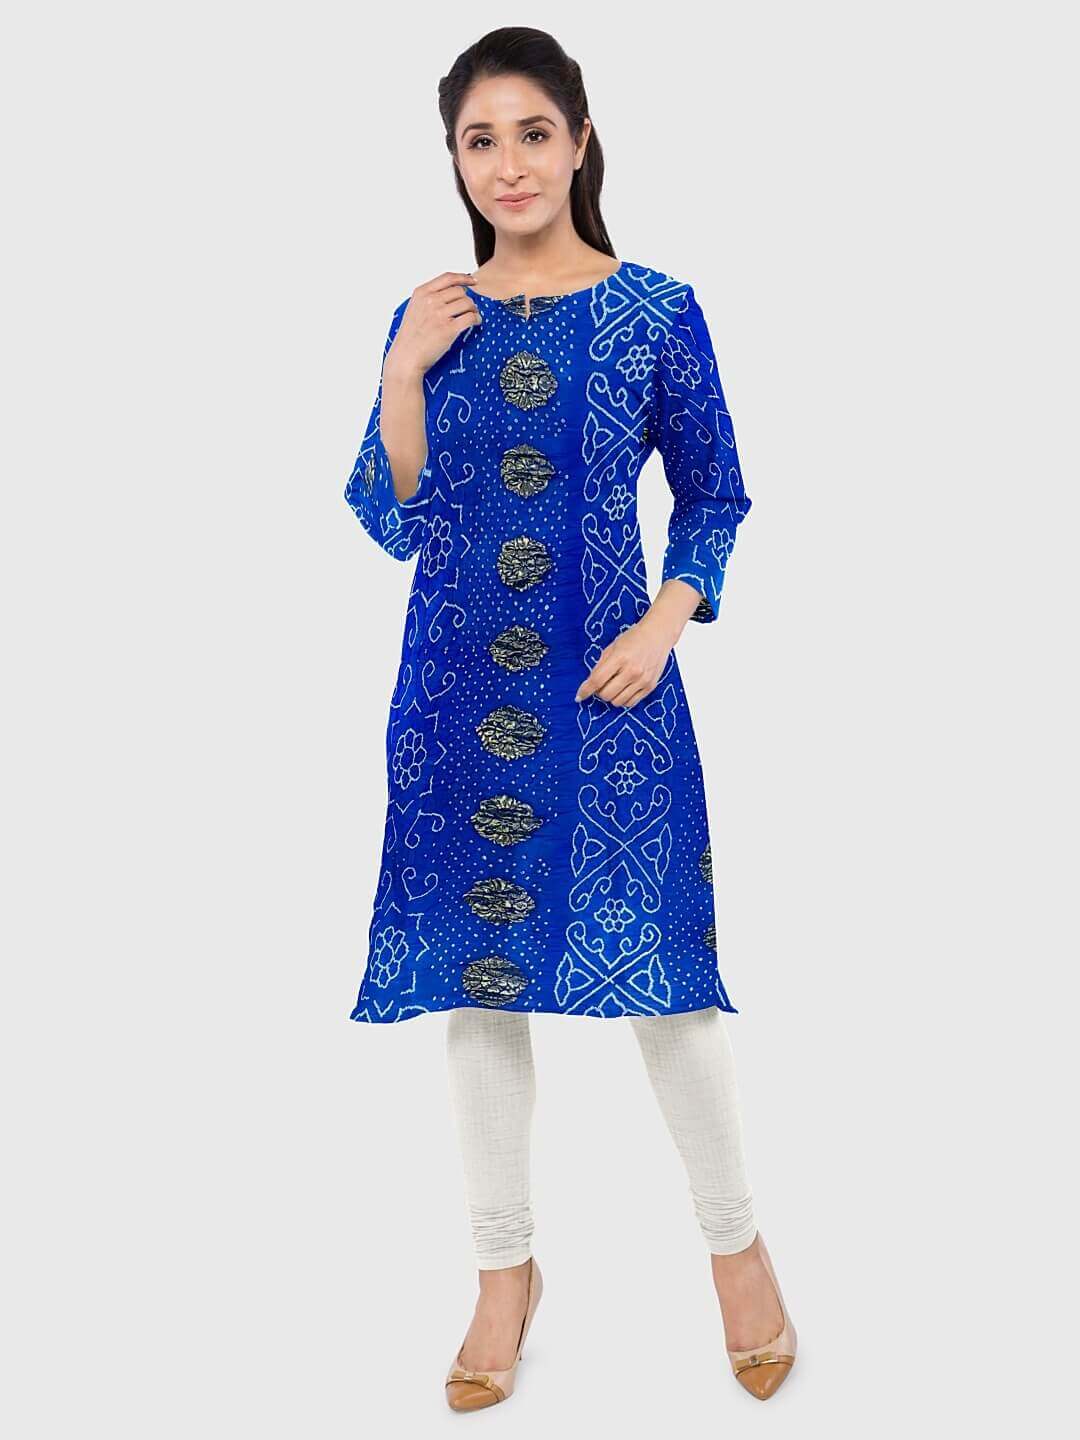 Navy Blue Foil-Printed Chanderi Silk Casual Readymade Kurti-Pants Suit